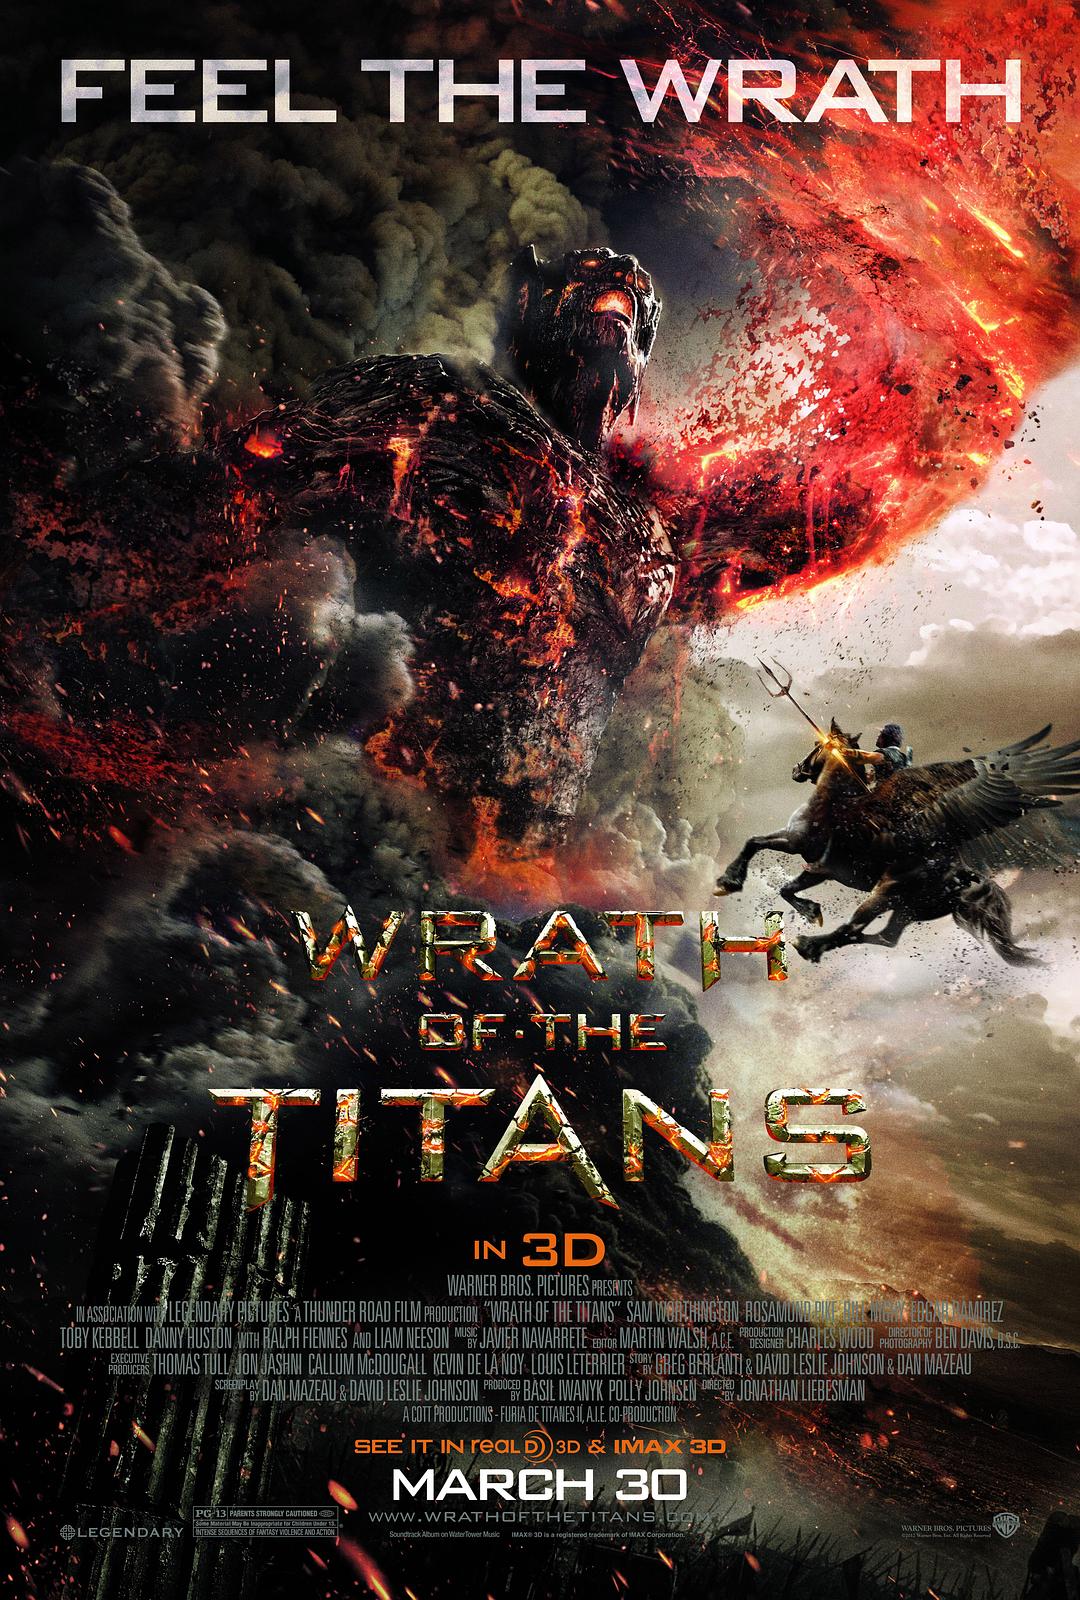 [诸神之战2].Wrath.of.the.Titans.2012.3D.BluRay.1080p.AVC.DTS-HD.MA.5.1-HDChina    31.28G-2.jpg